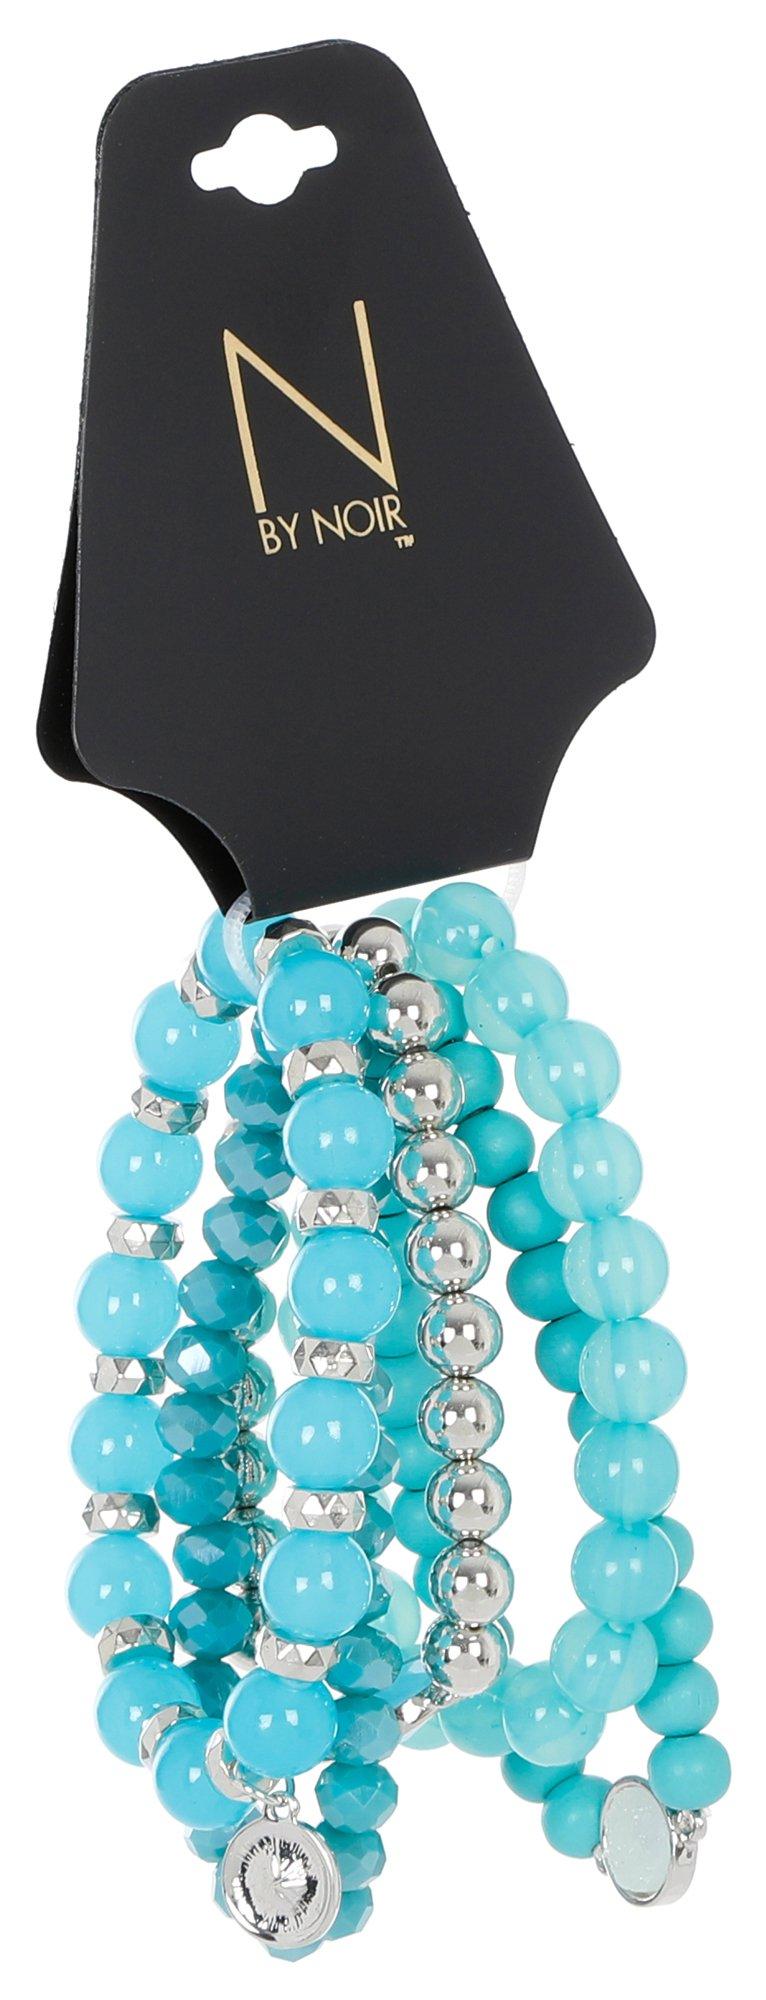 Cute Bracelets for Girls, Leather Bracelets - Blue Spark, Kate Sira – KATE  SIRA